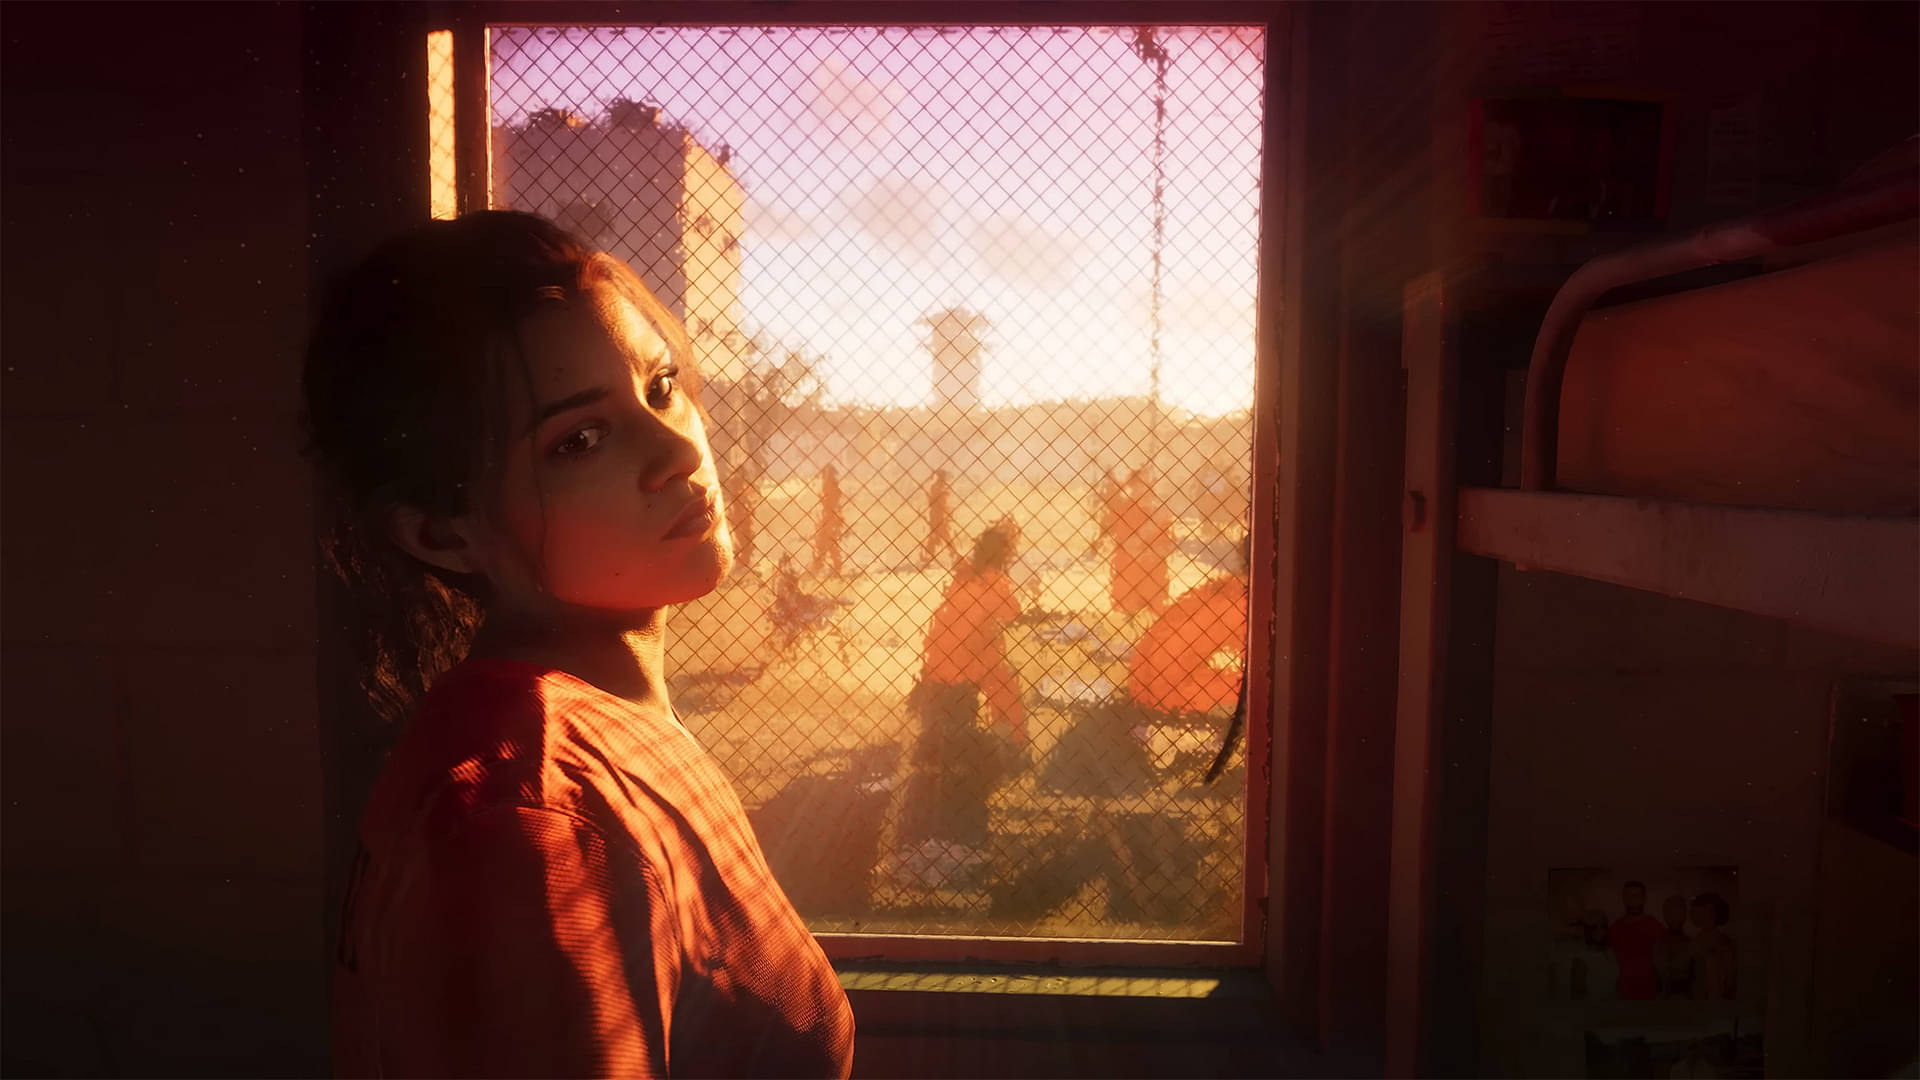 Rockstar Employee's Kid Allegedly Leaks GTA 6 Footage Ahead Of First  Trailer On December 5